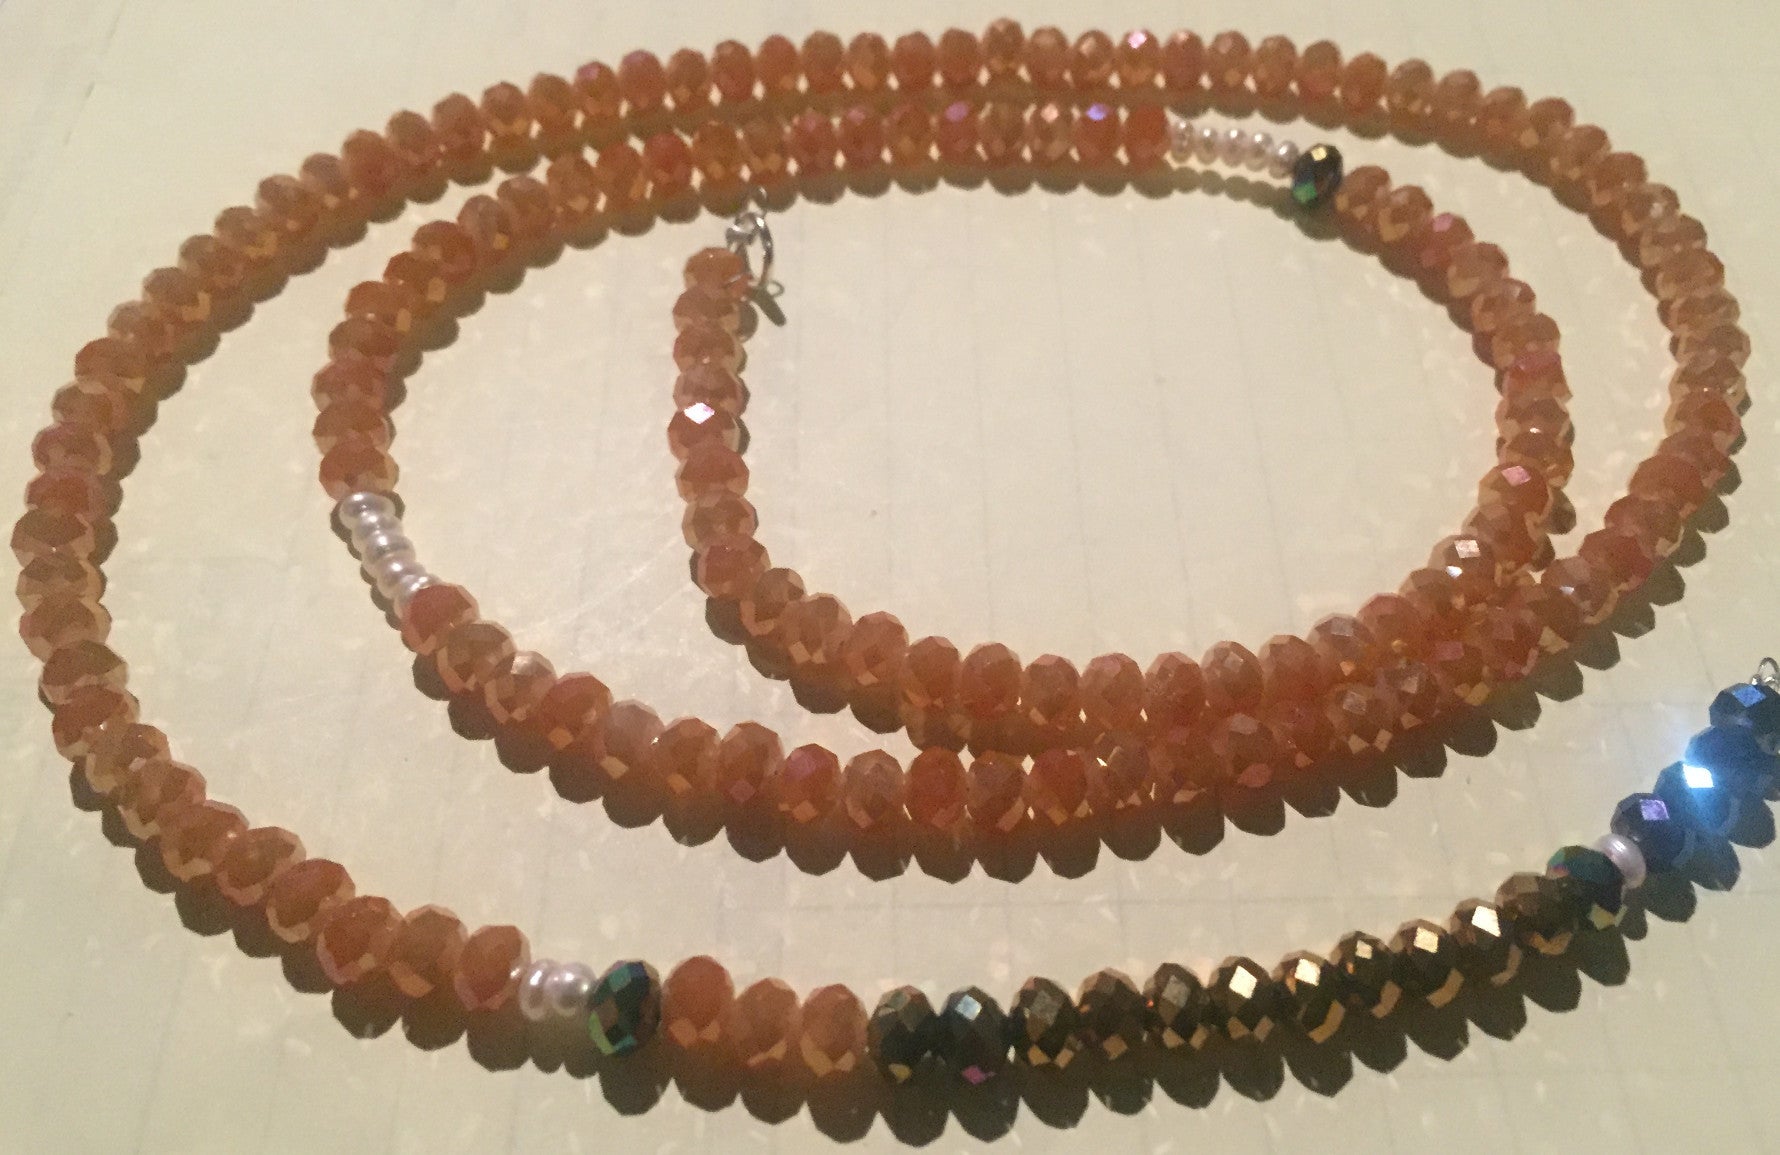 Goddess Waist Beads - The Crystal - Nubian Goods